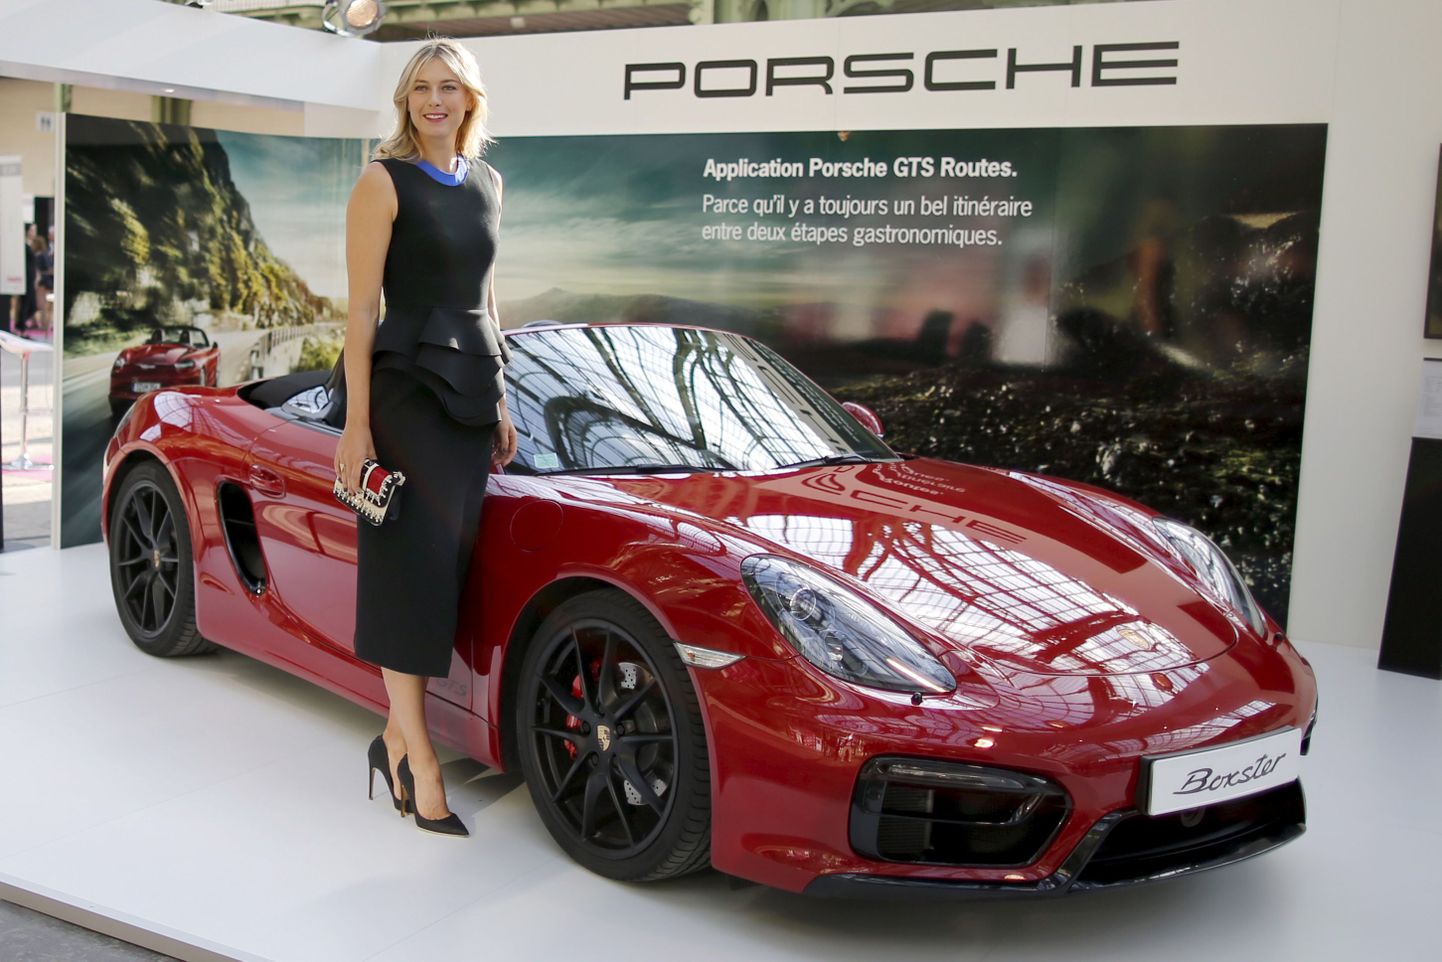 See on klassika: kaunis naine ja punane kiirauto. Ehk Maria Šarapova ja Porsche.